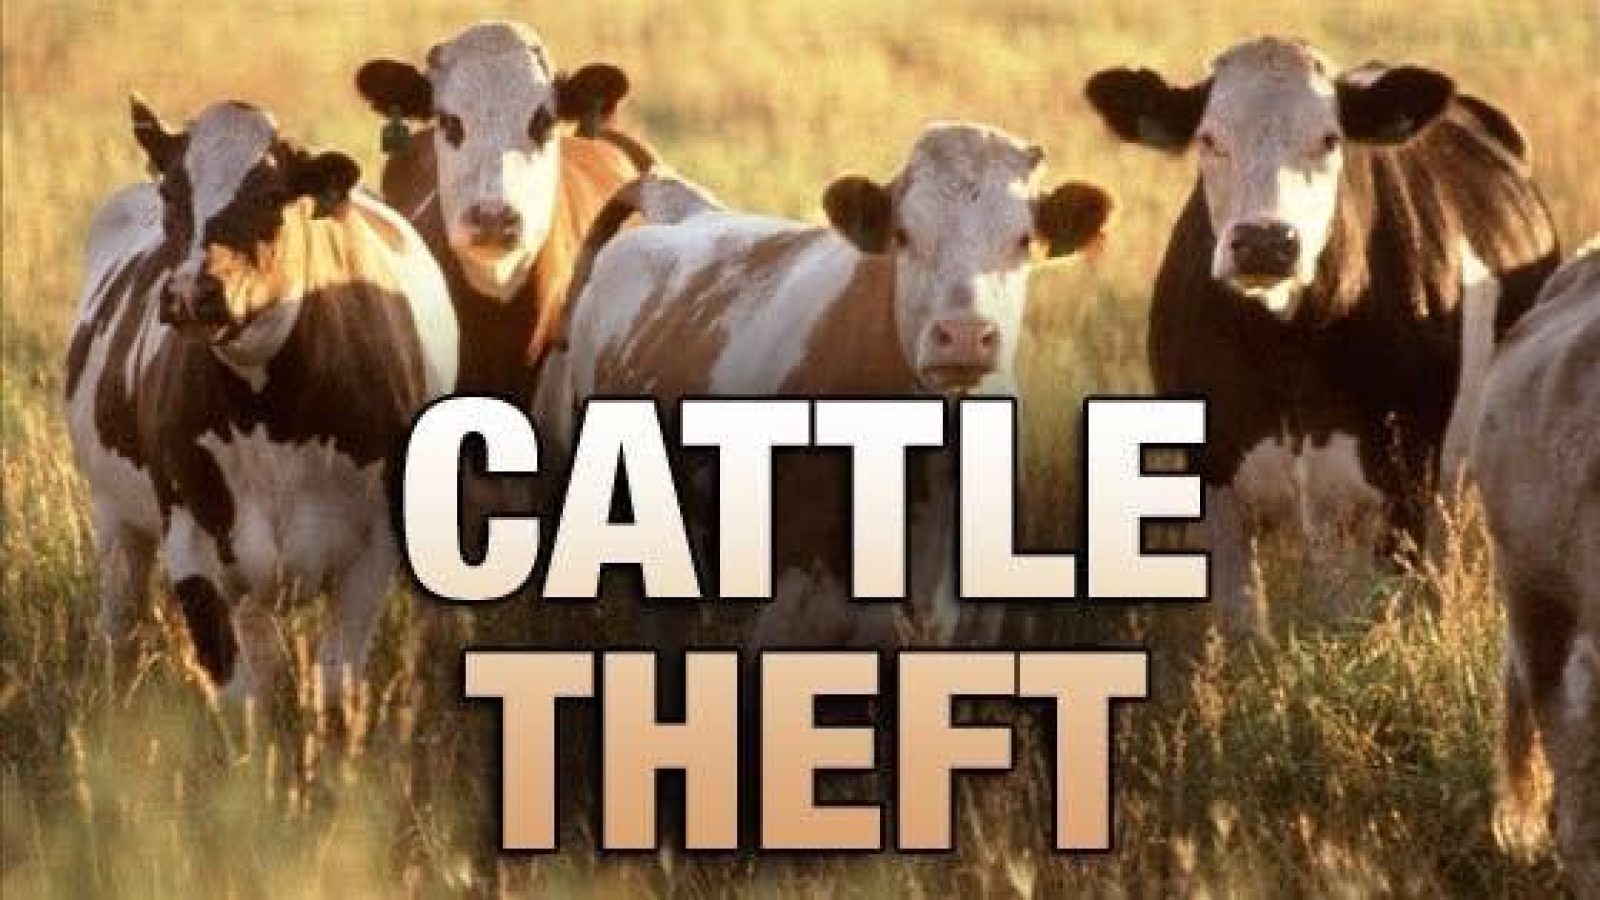 cattle theft reported southdakota